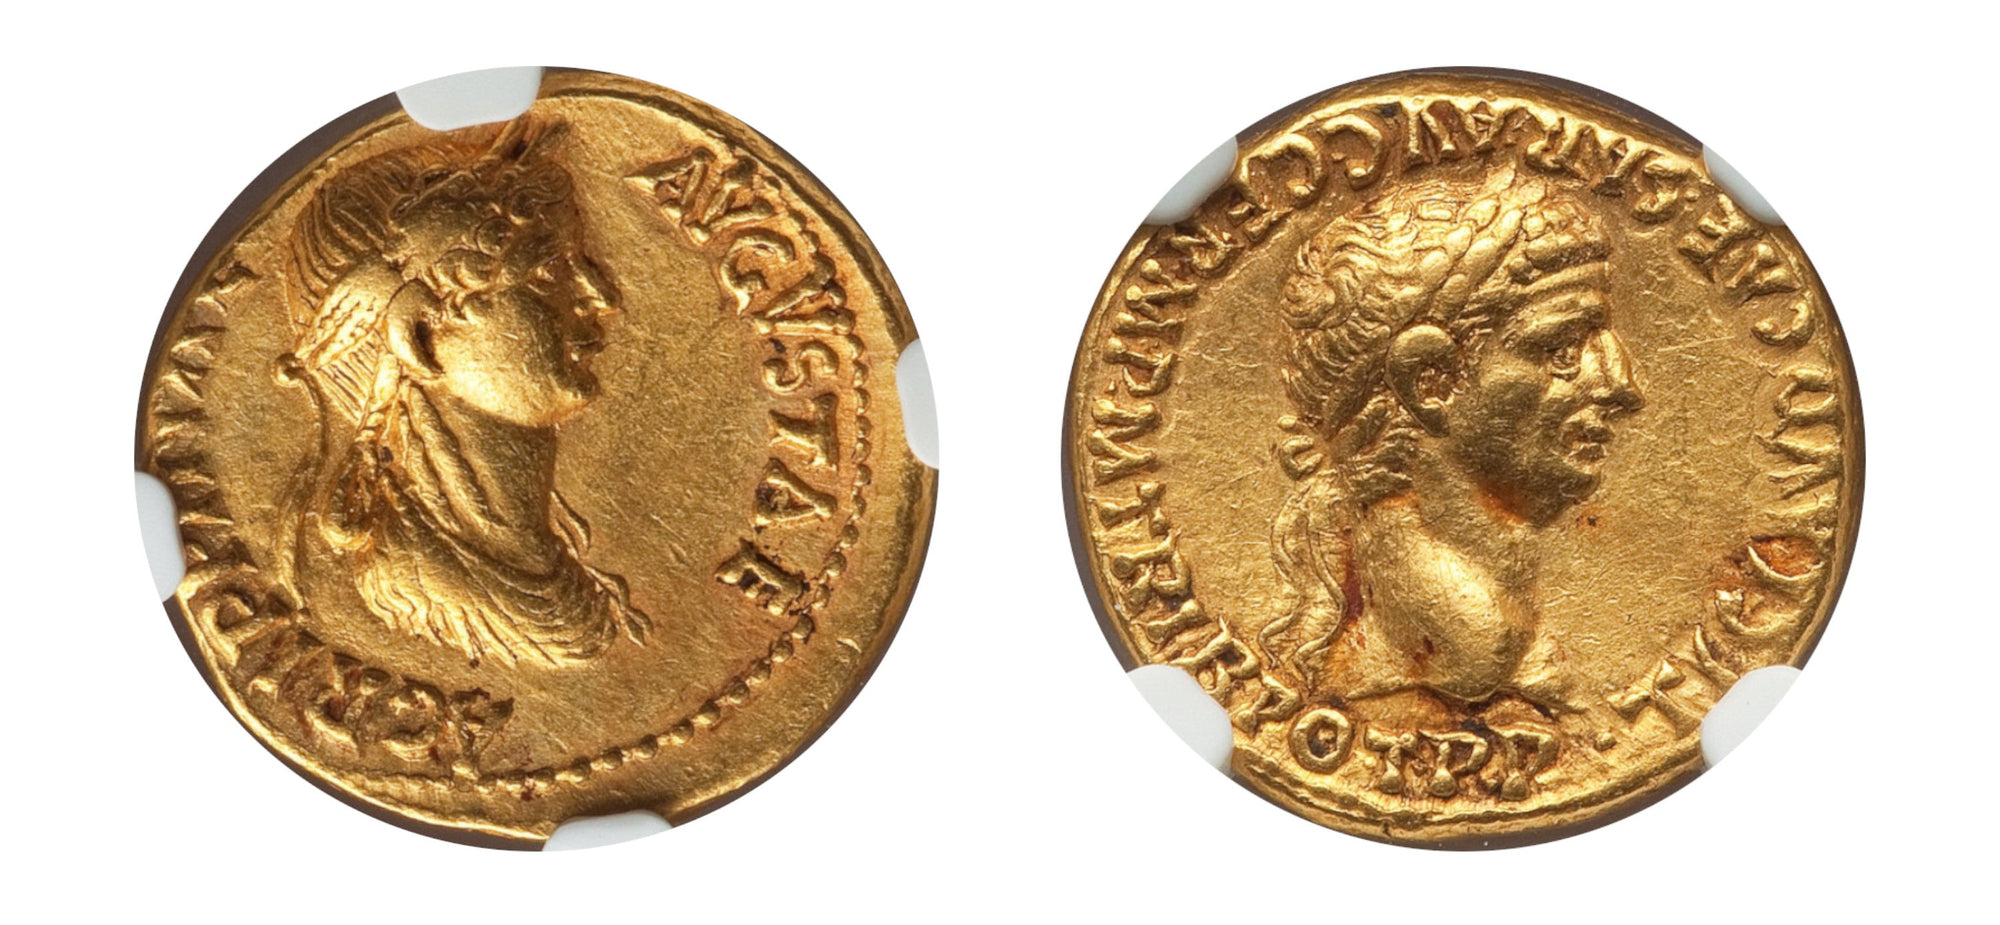 41-54 AD Claudius I with Agrippina Junior. AV aureus NGC Choice XF 4/5 - 2/5 - Hard Asset Management, Inc